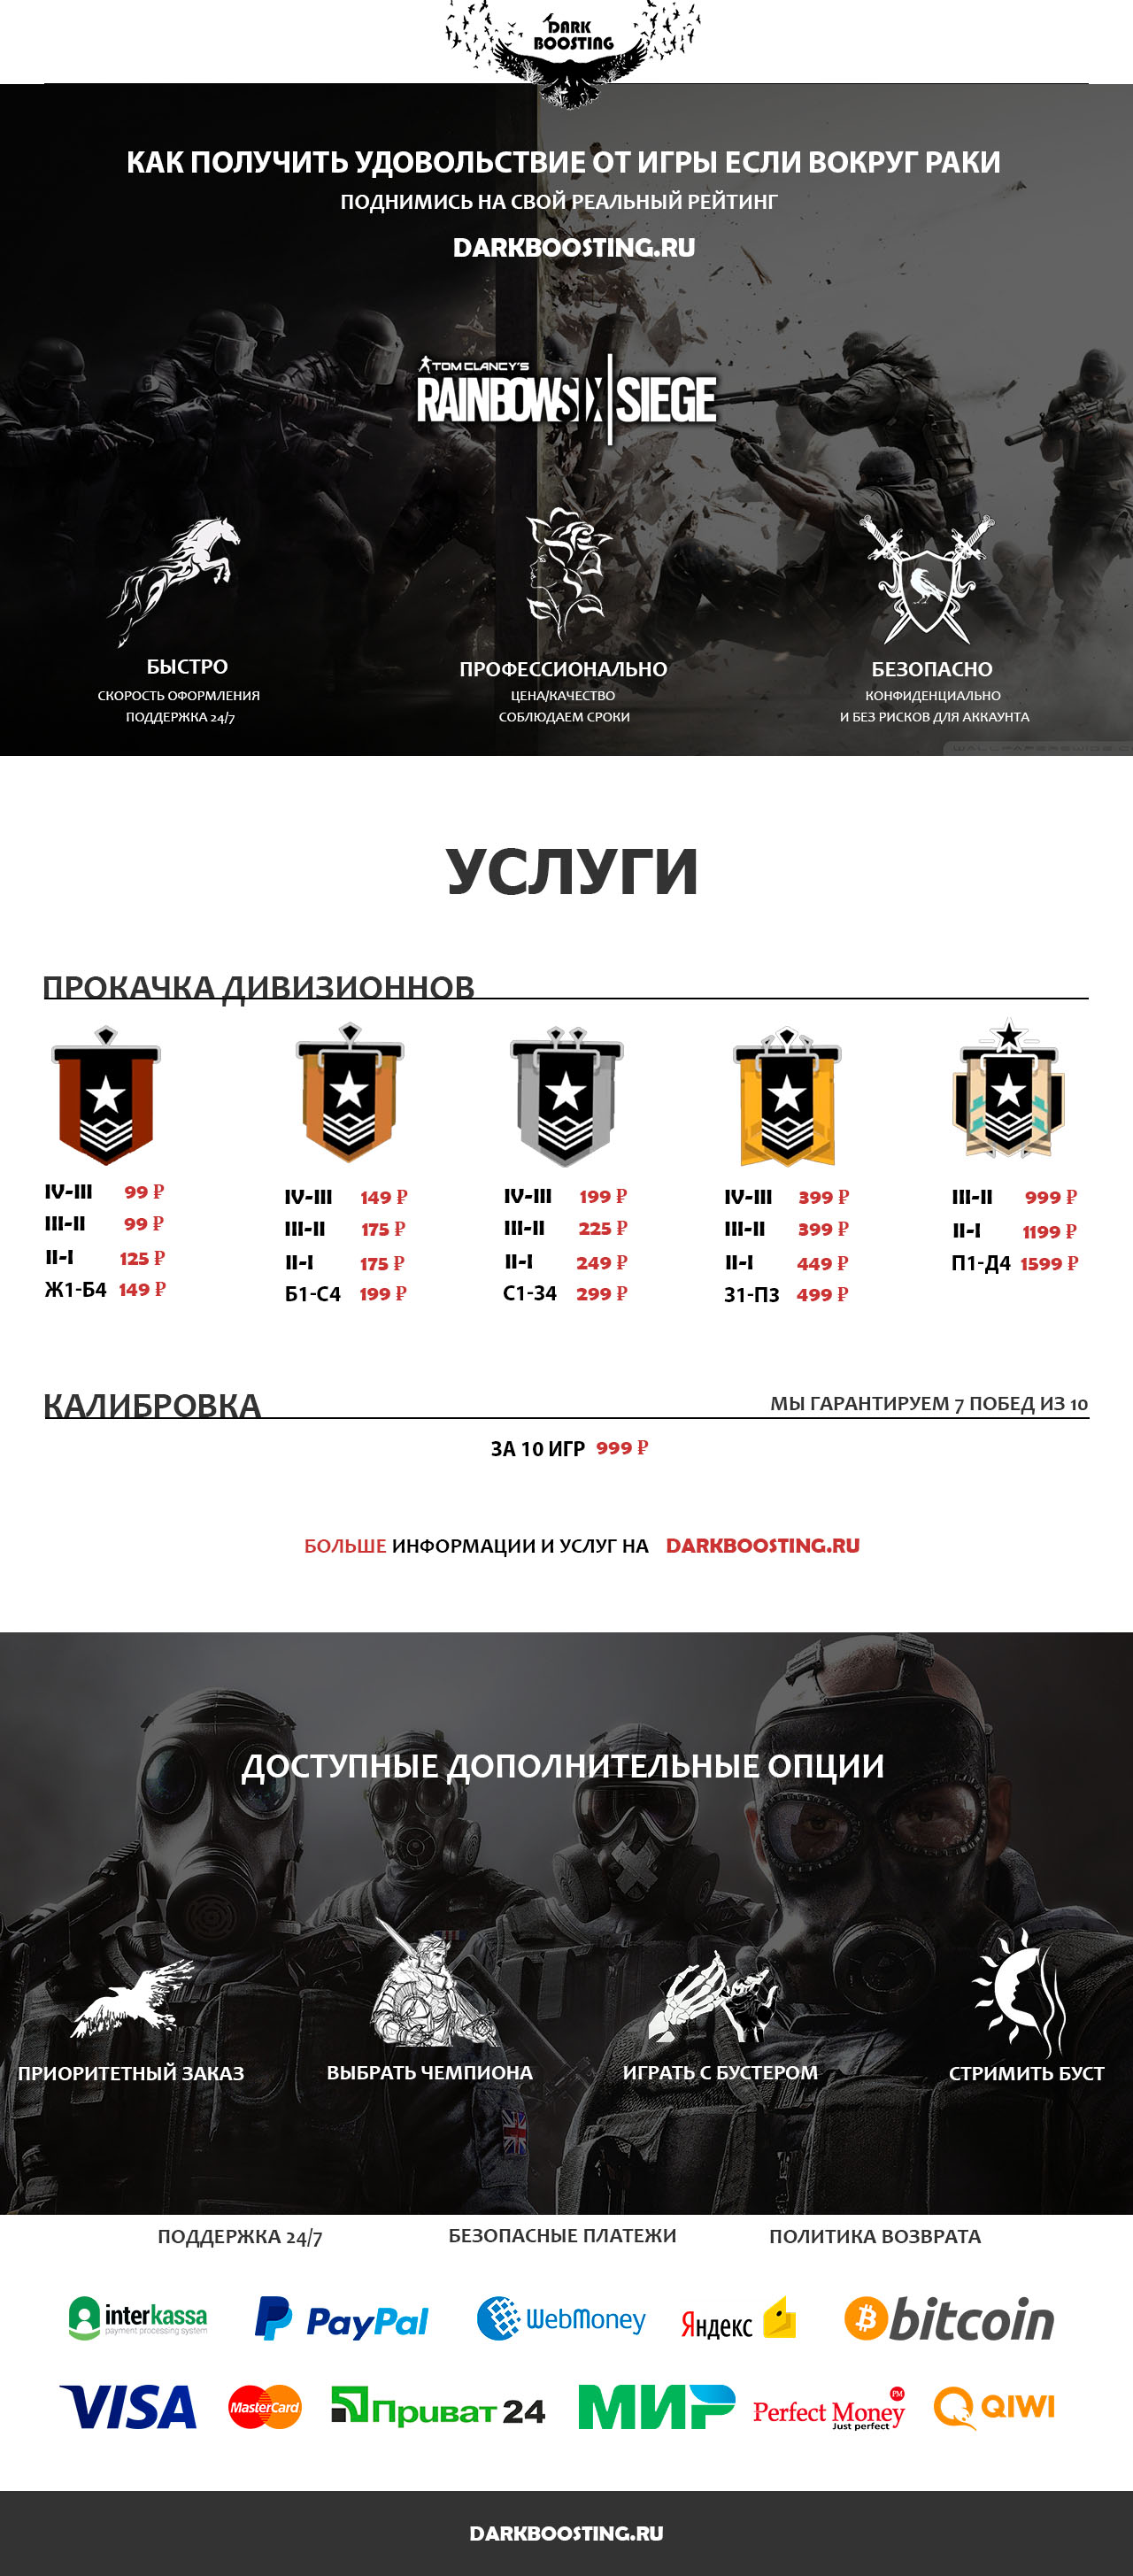 DarkBoosting - cheap russian service-ru_rainbow-jpg